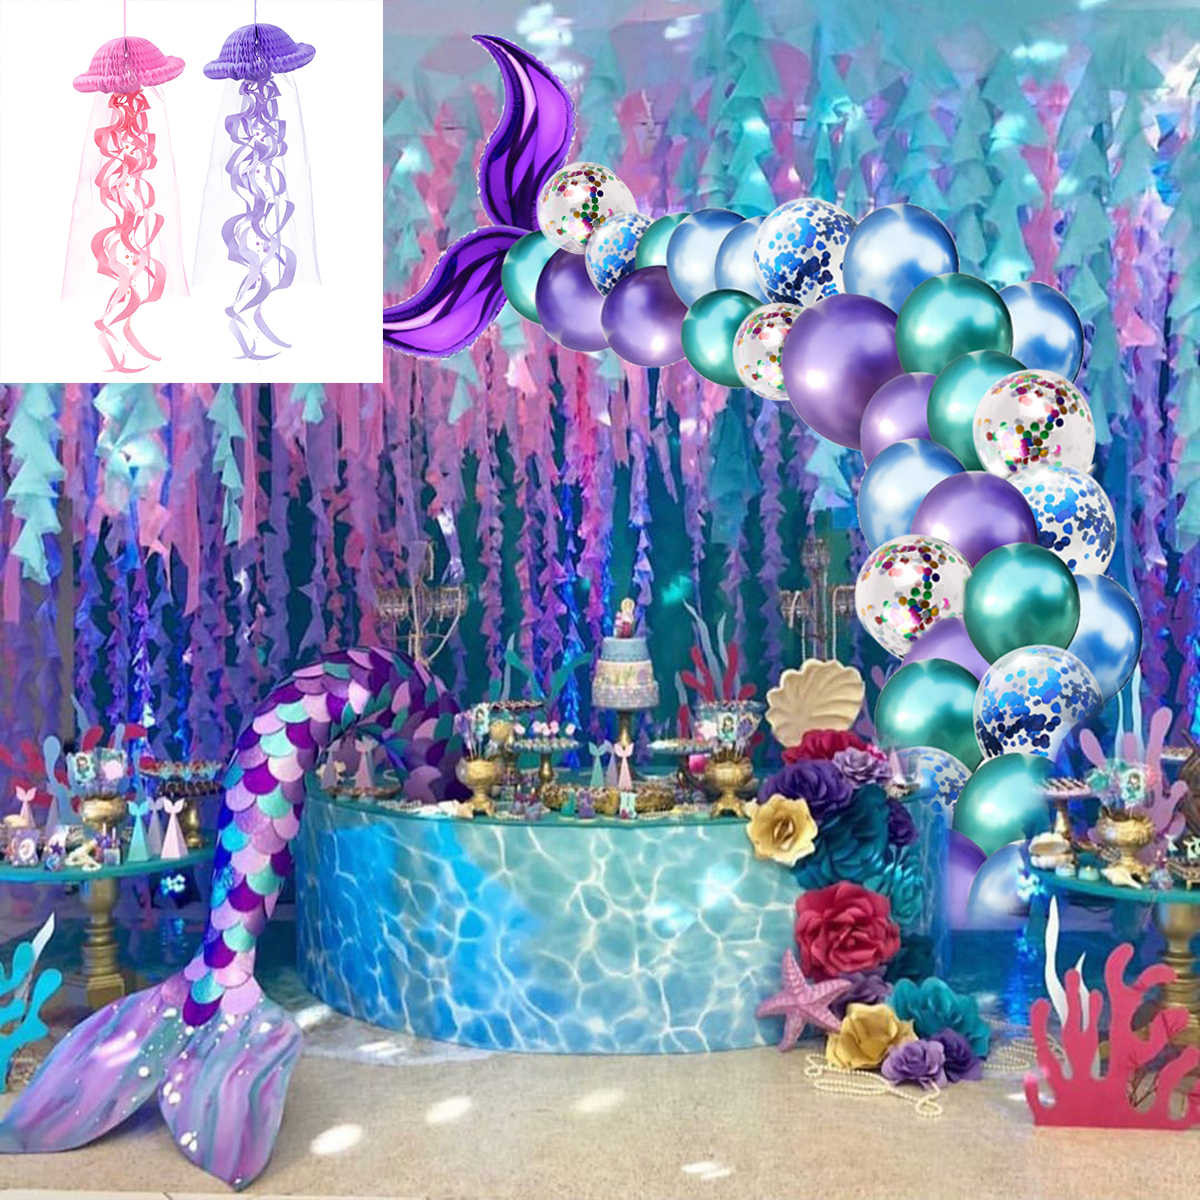 Ideas For Little Mermaid Party
 HUIRAN Romantic Little Mermaid Party Supplies Mermaid